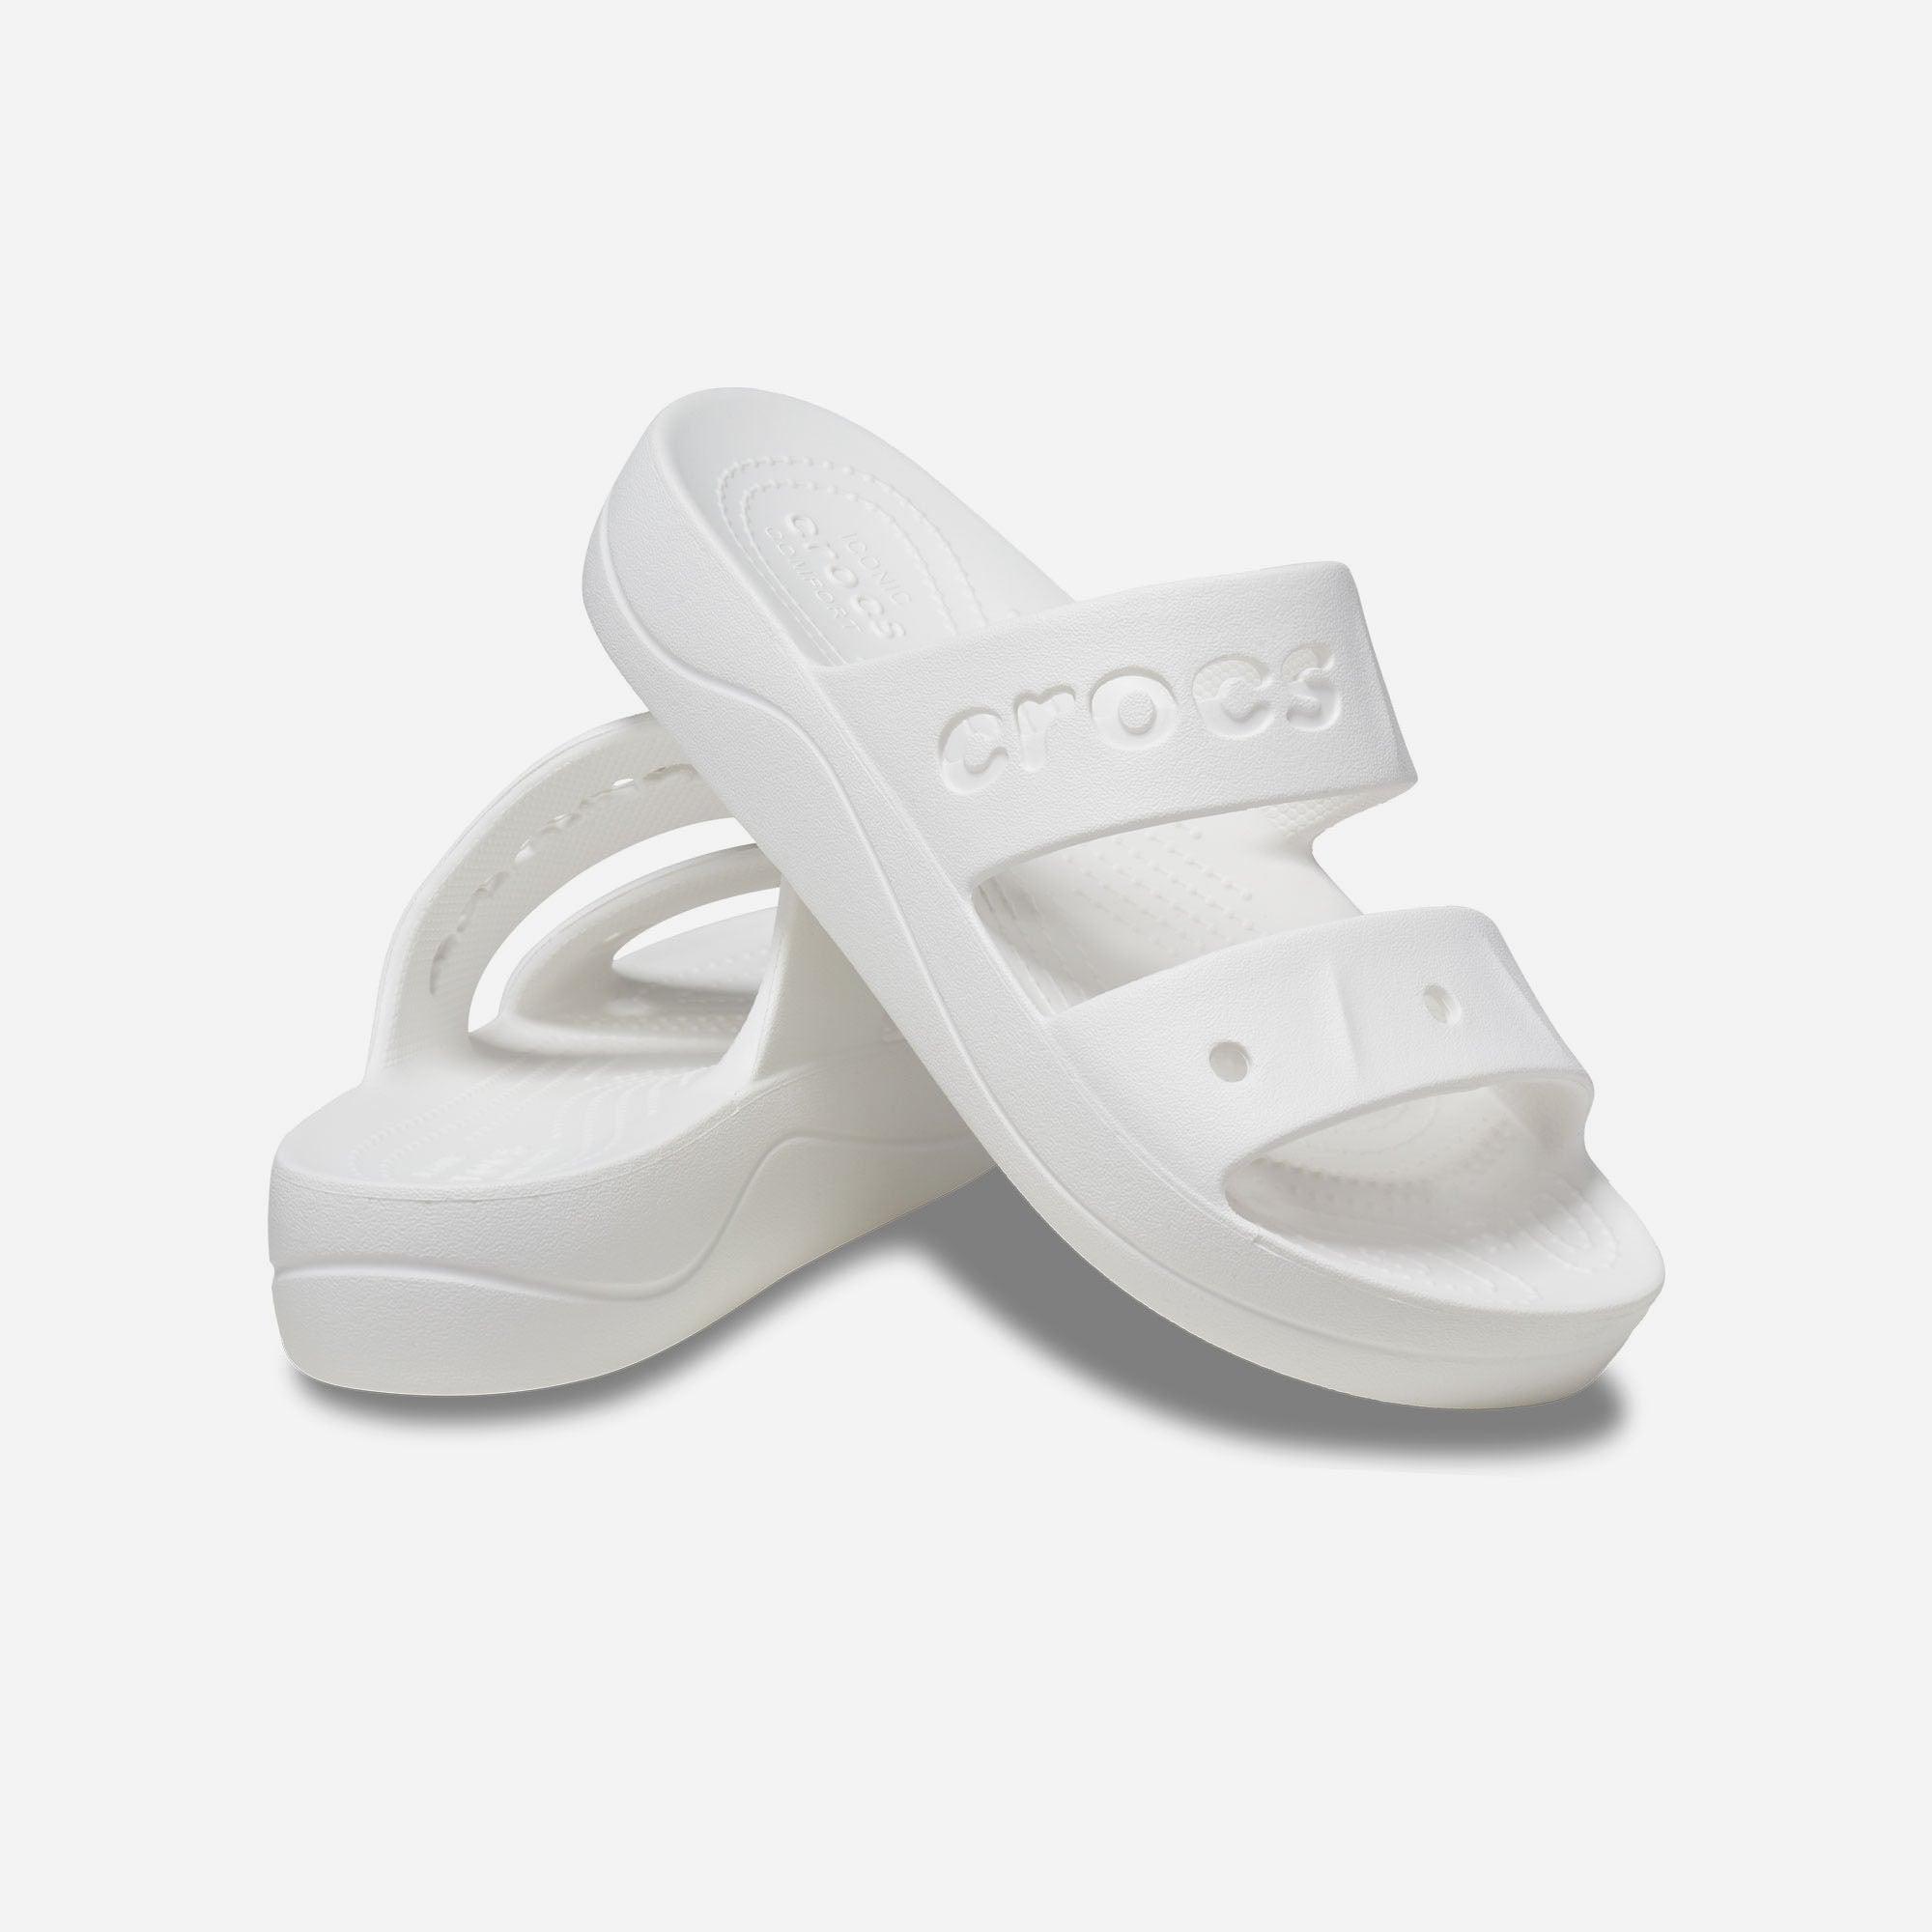 Giày sandal nữ Crocs Baya Platform - 208188-100